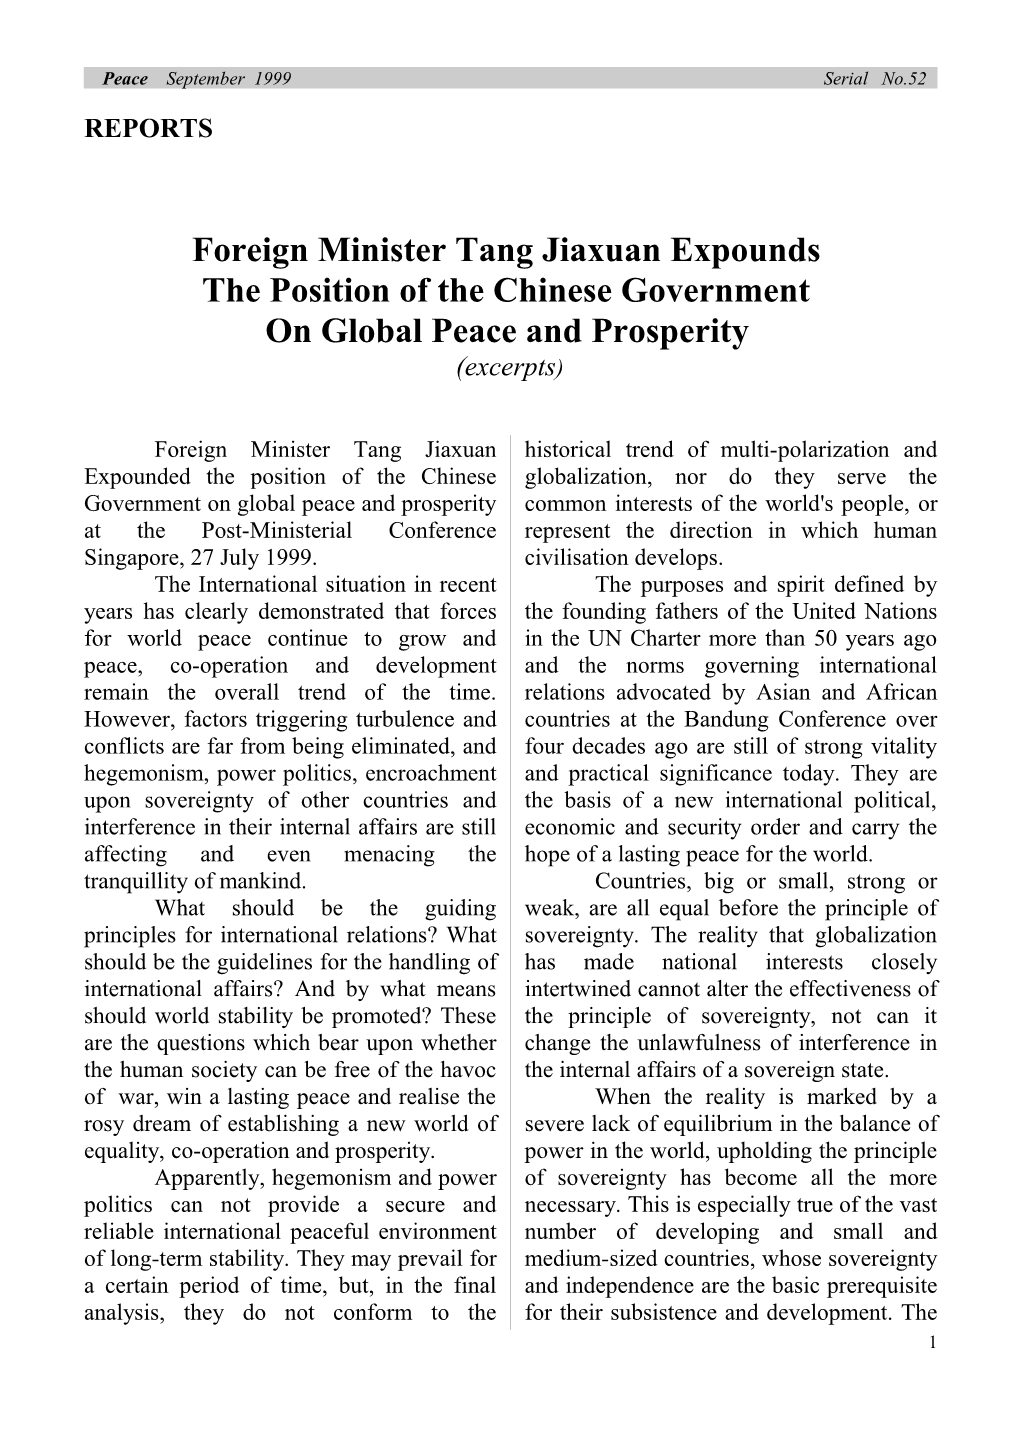 Foreign Minister Tang Jiaxuan Expounds